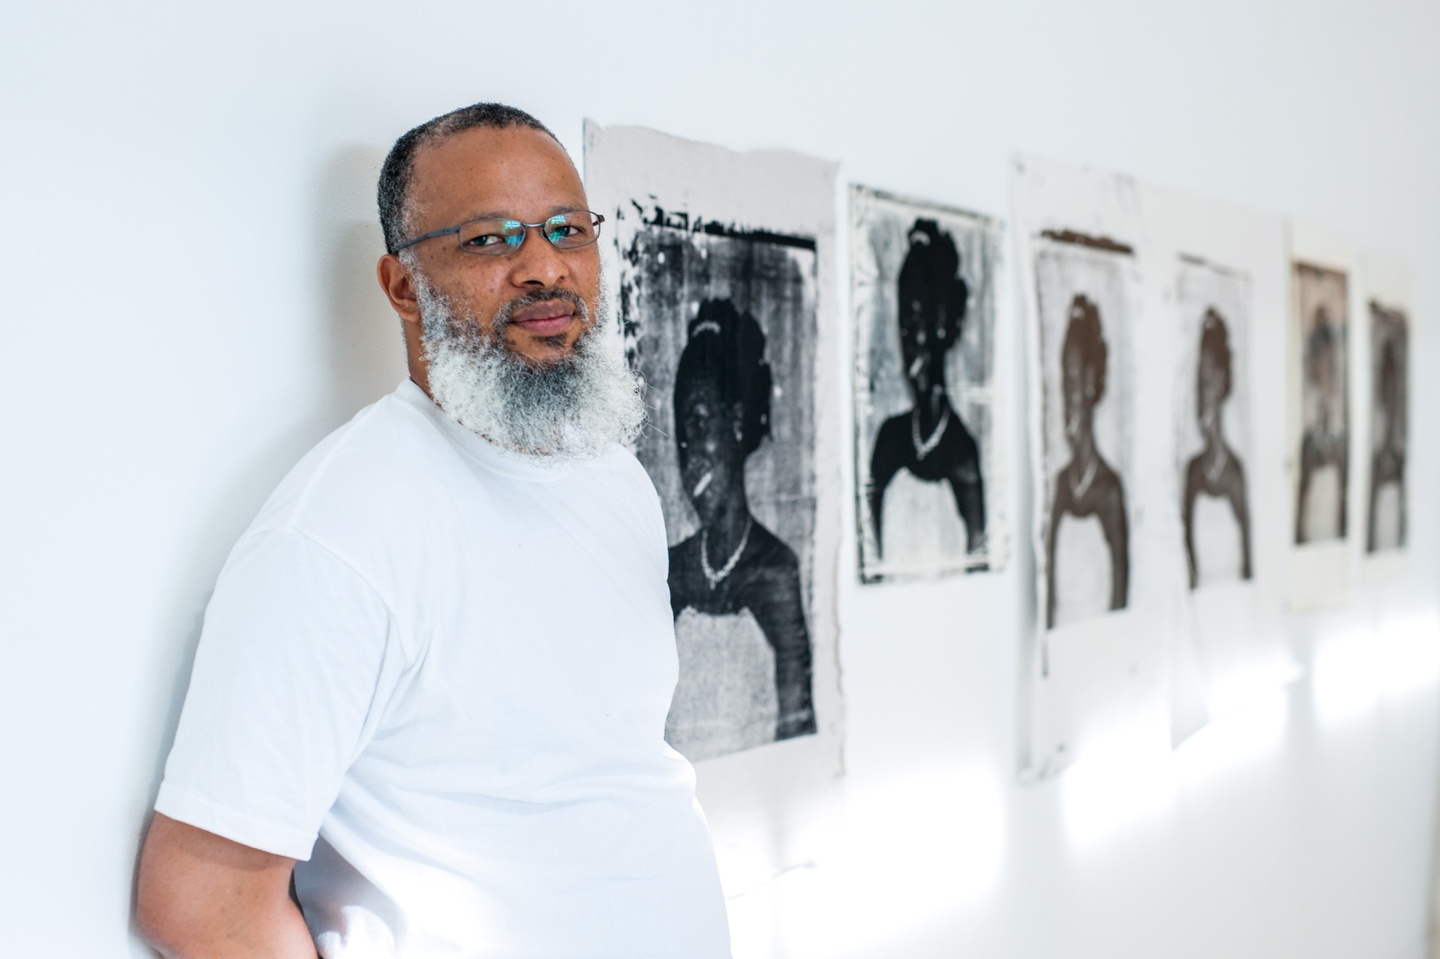 Meleko Mokogsi leaning against a wall next to his artwork 